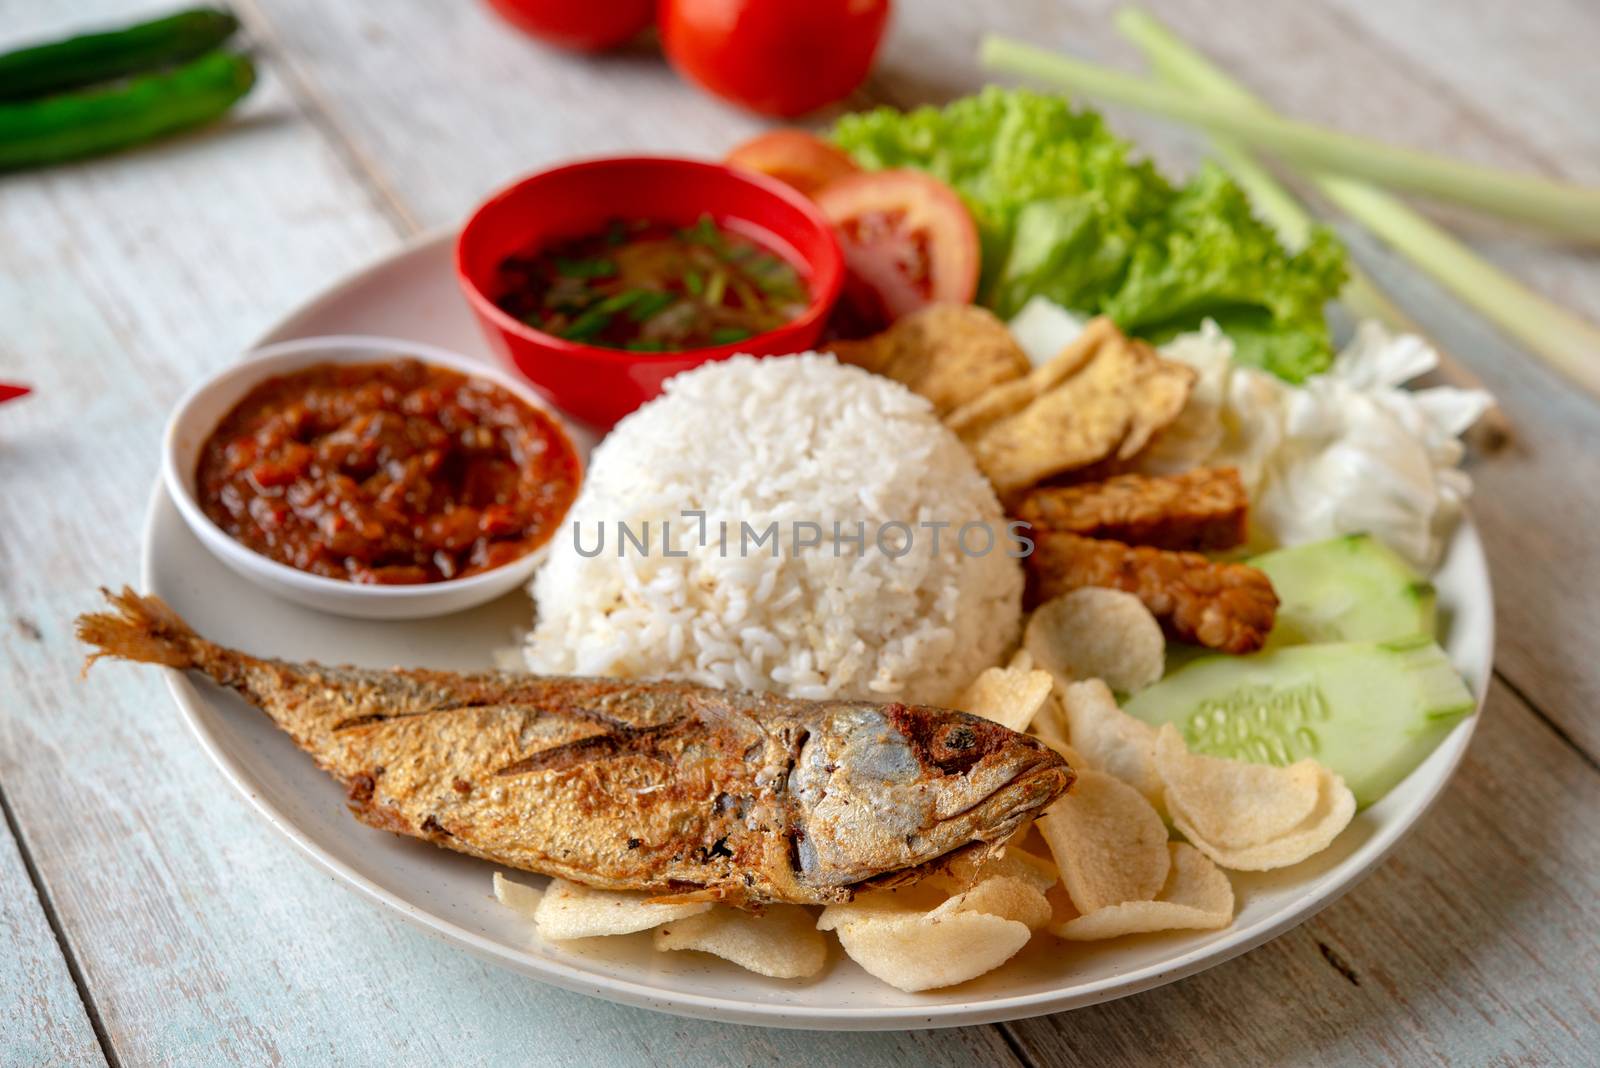 Fried mackerel fish rice with sambal, popular traditional Malay or Indonesian local food.